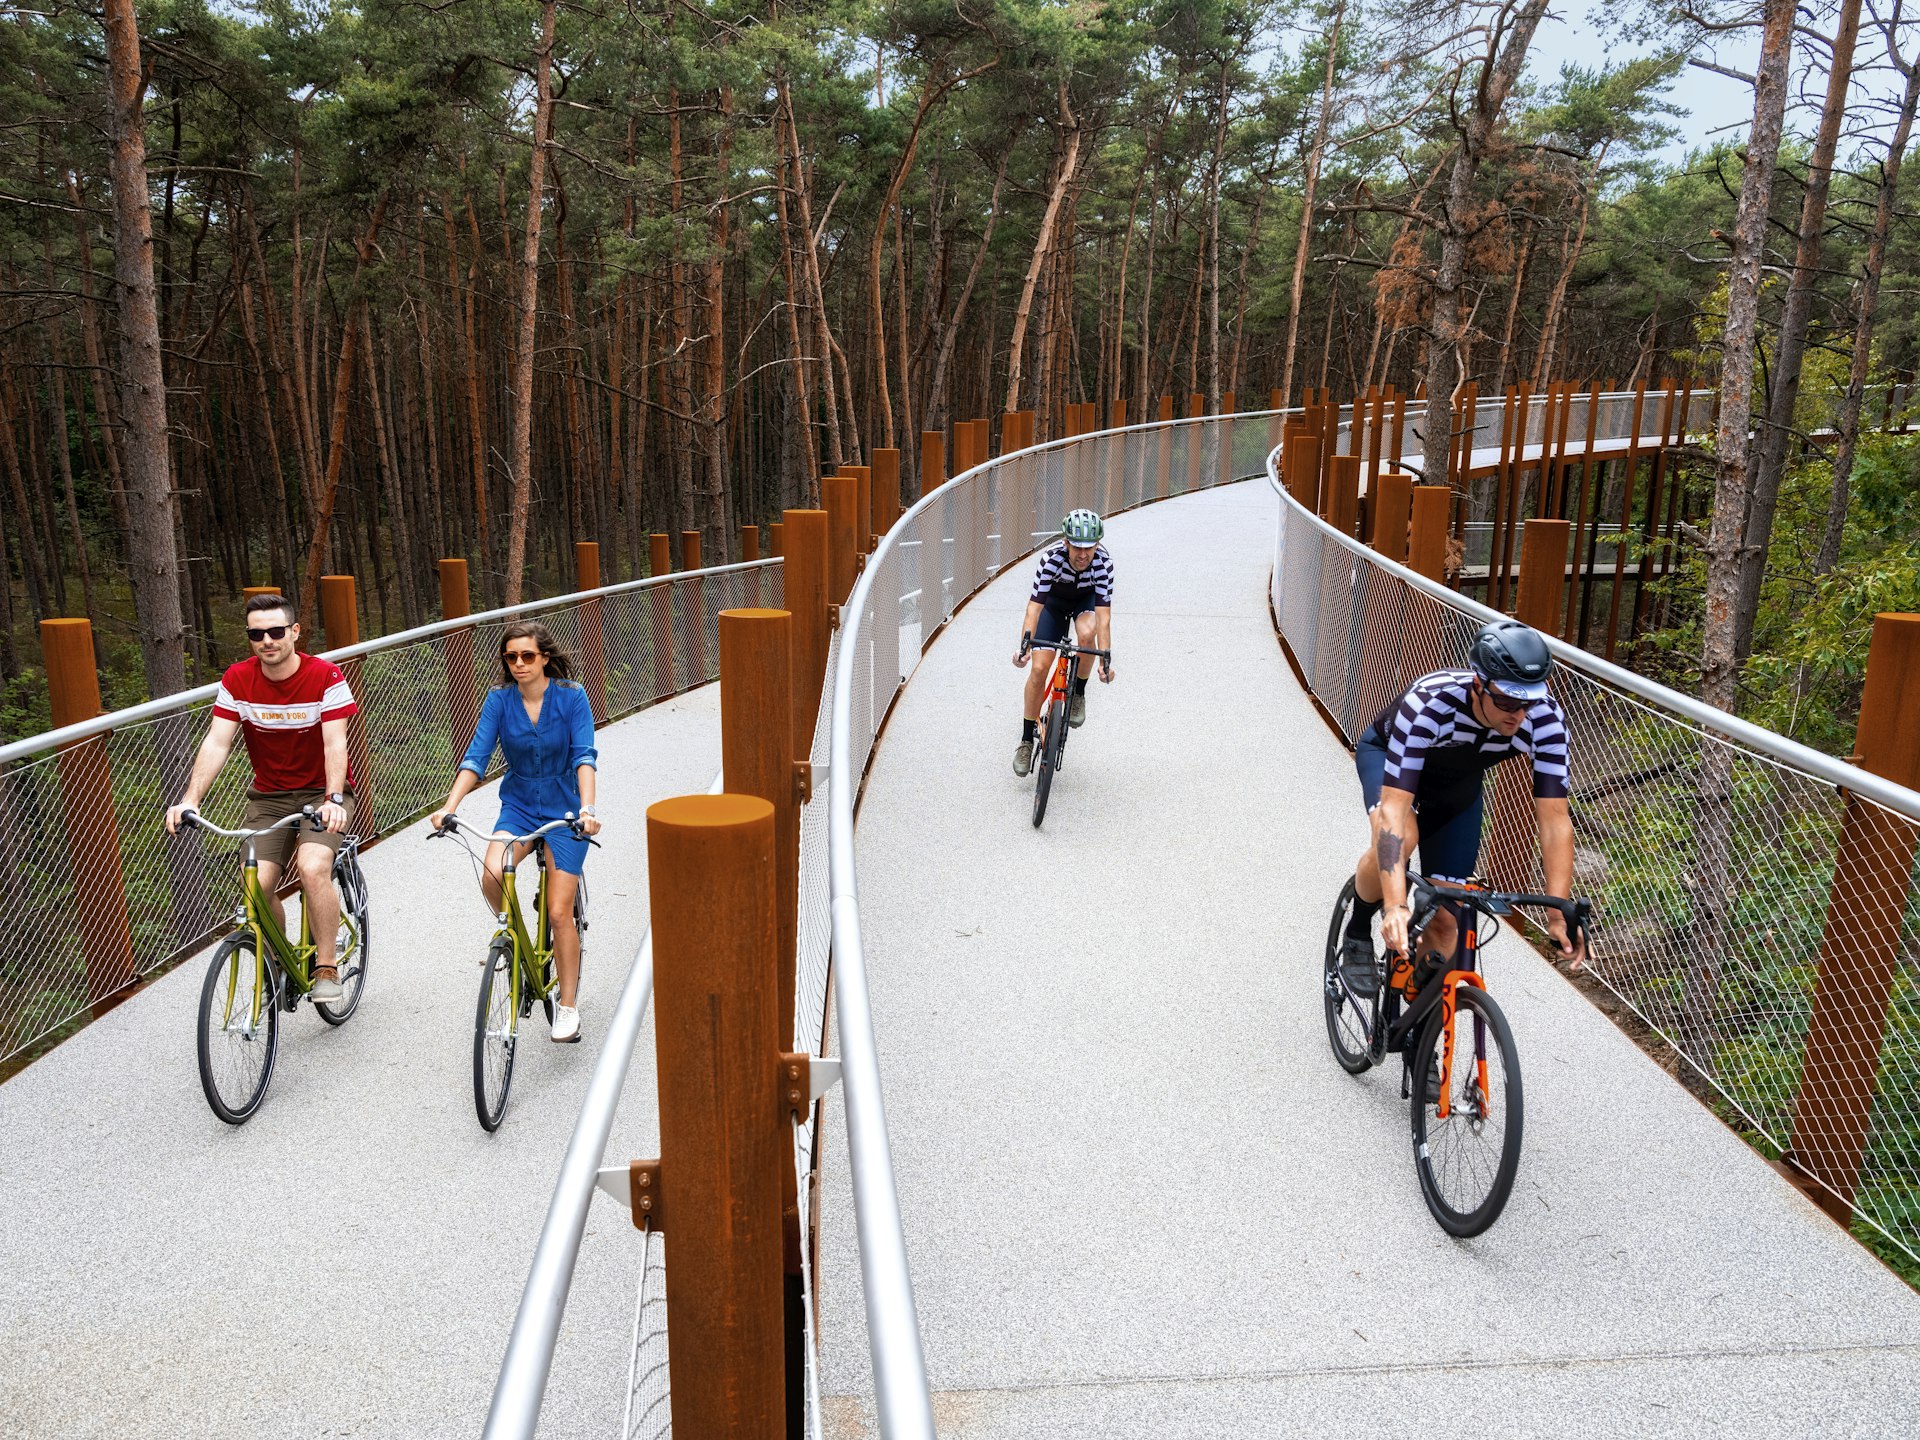 Cyclists ride through a circular forest cycling trail